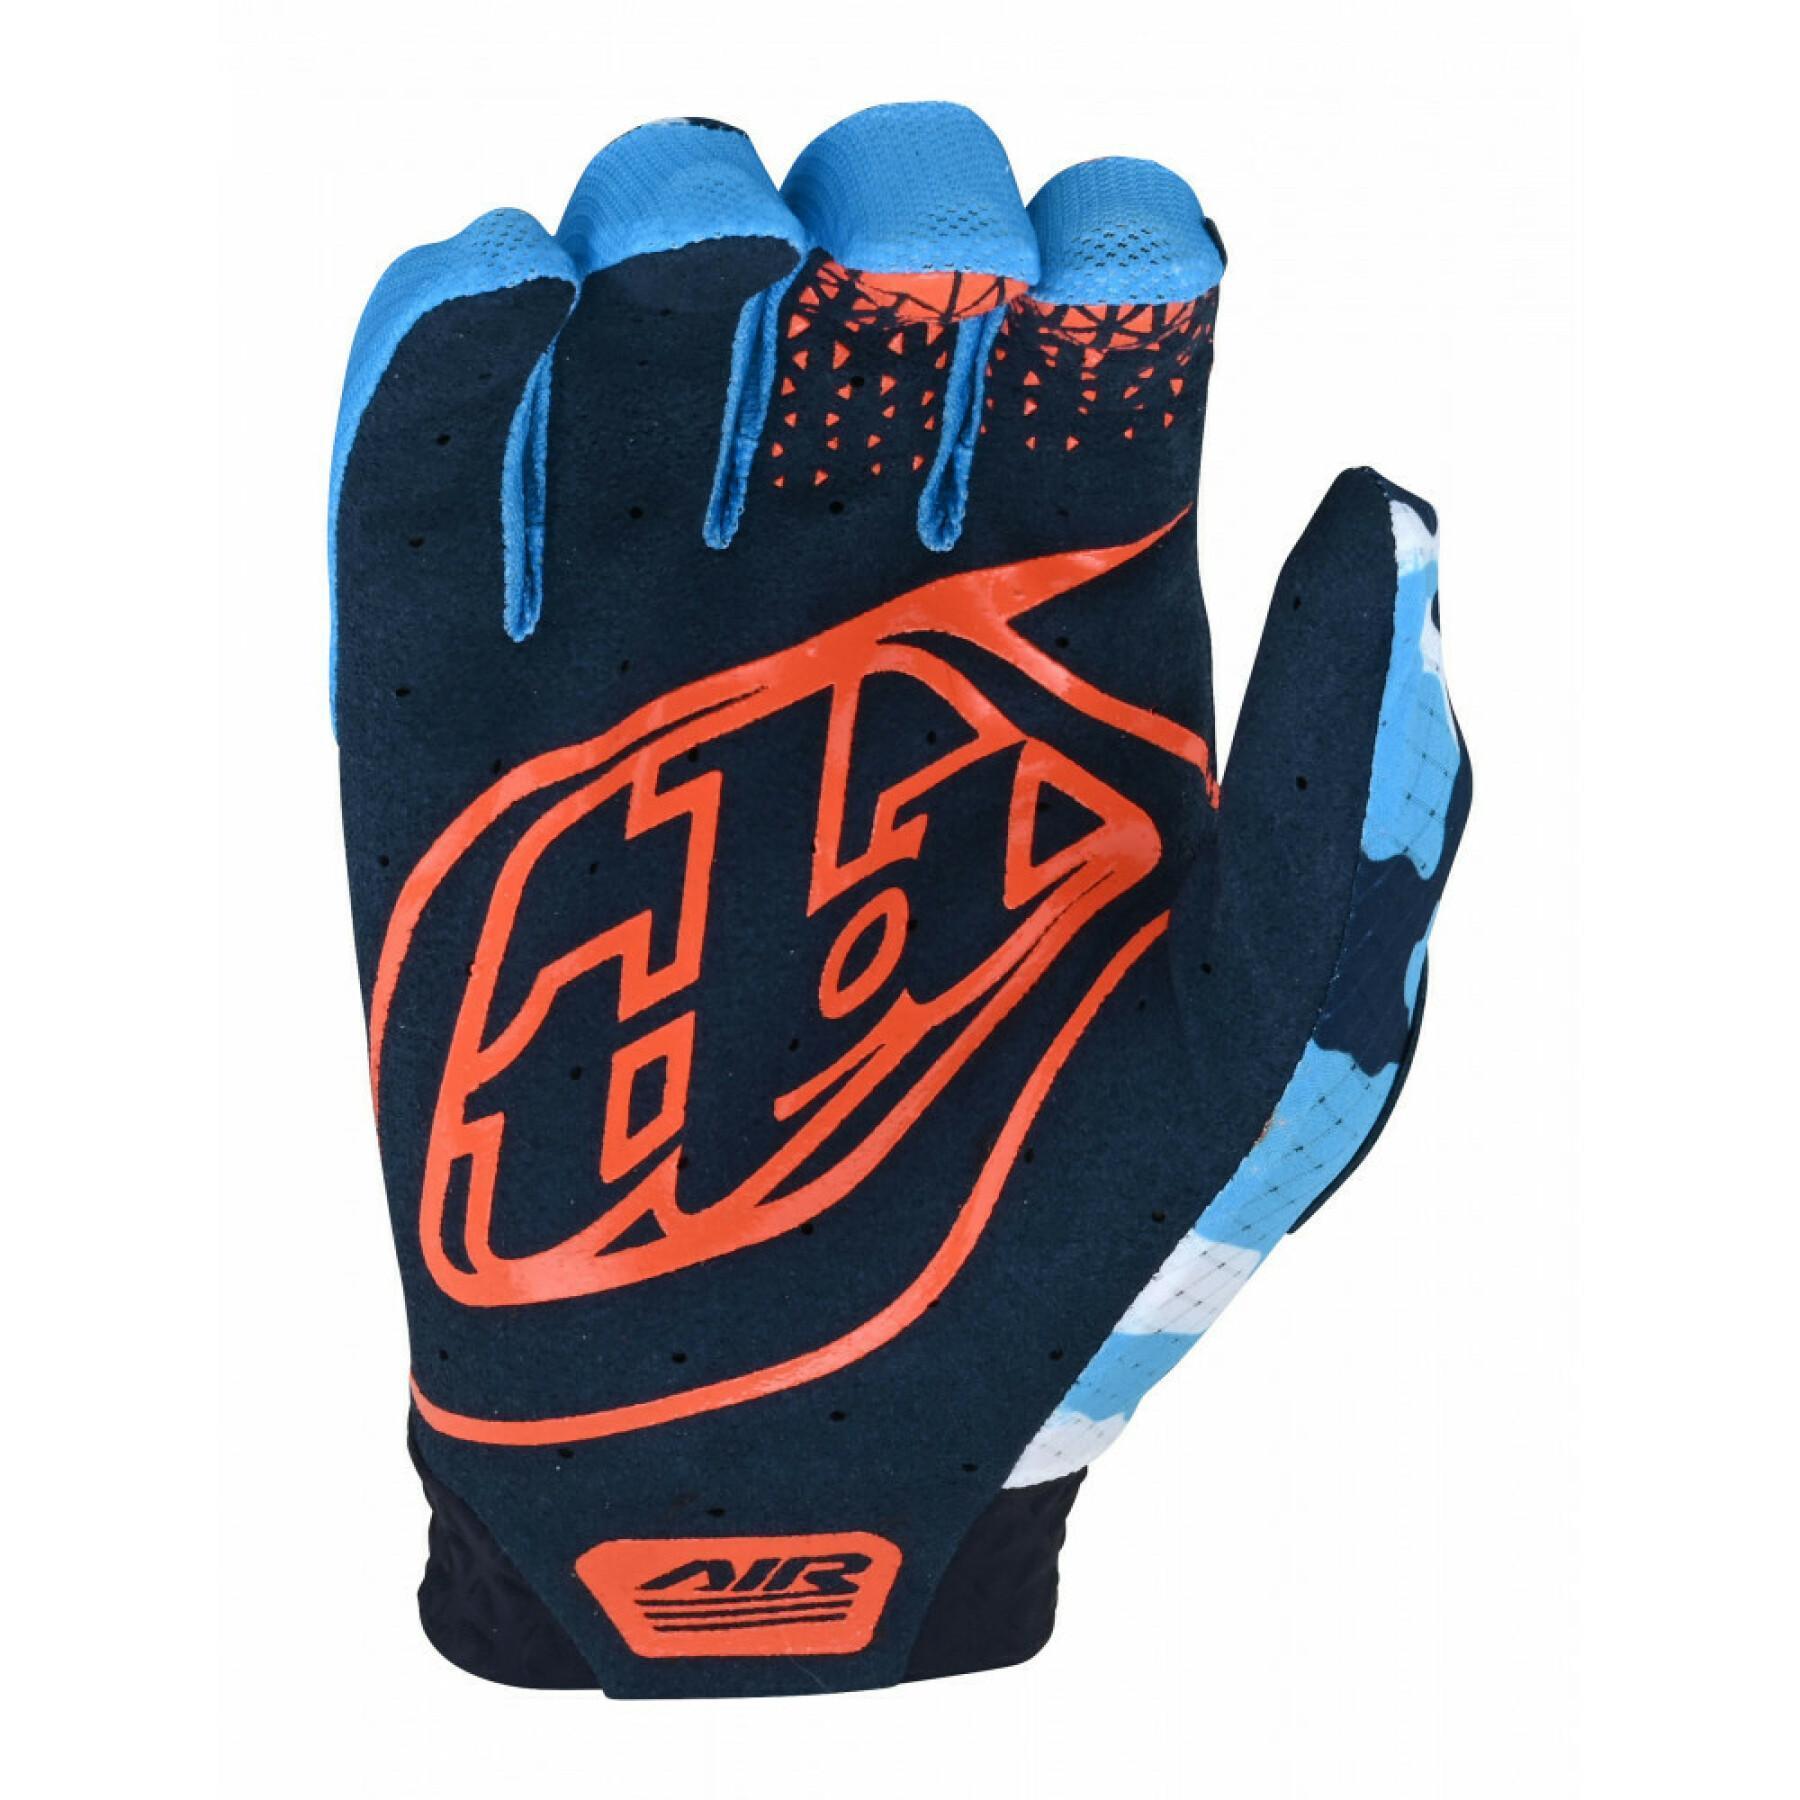 Motorcross handschoenen Troy Lee Designs Air formula